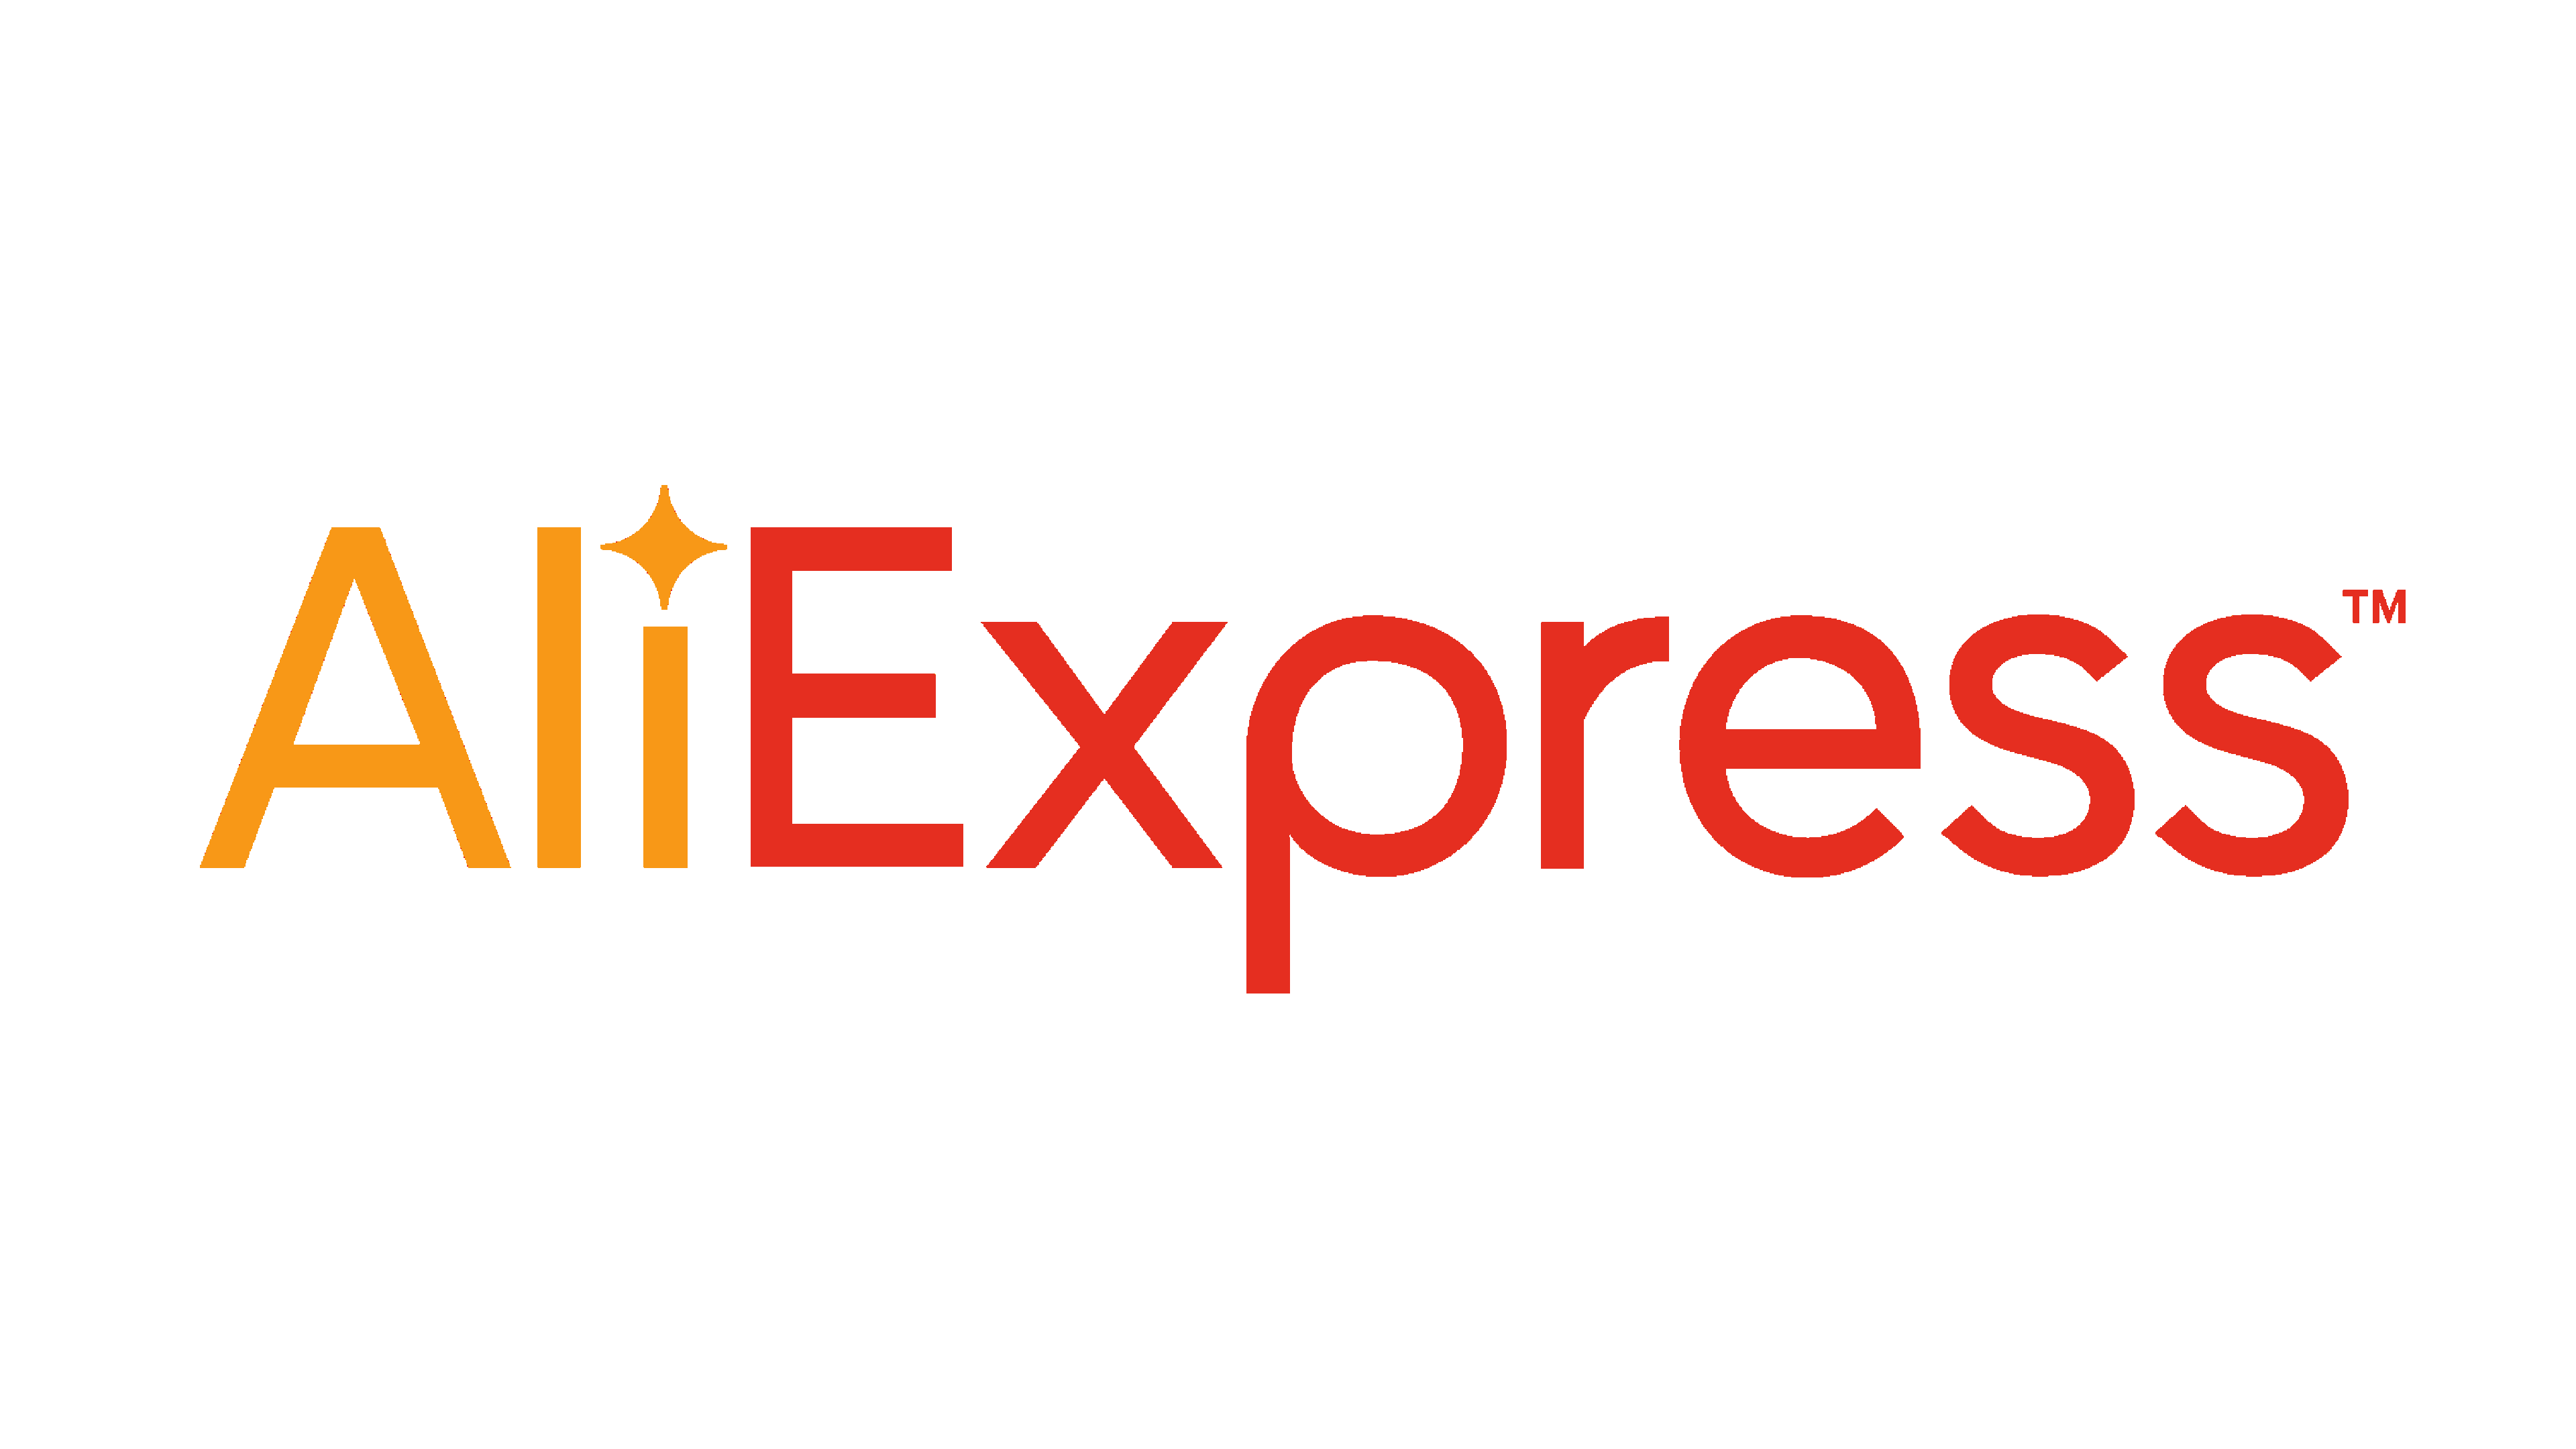 AliExpress kody rabatowe